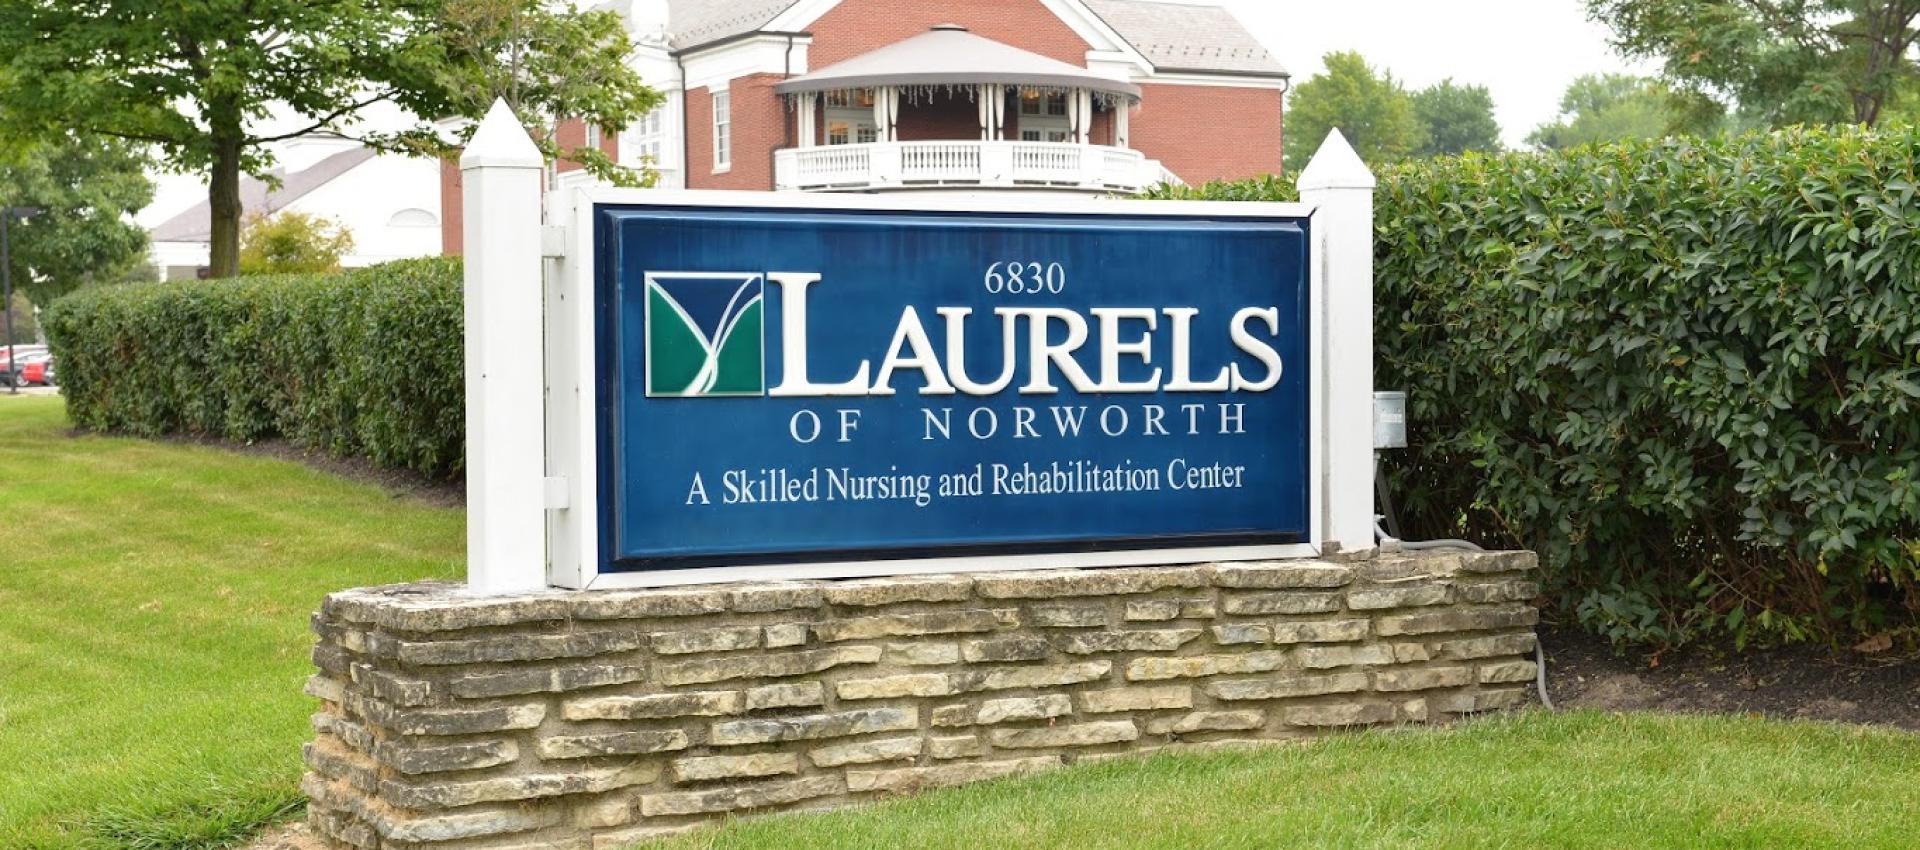 The Laurels of Norworth